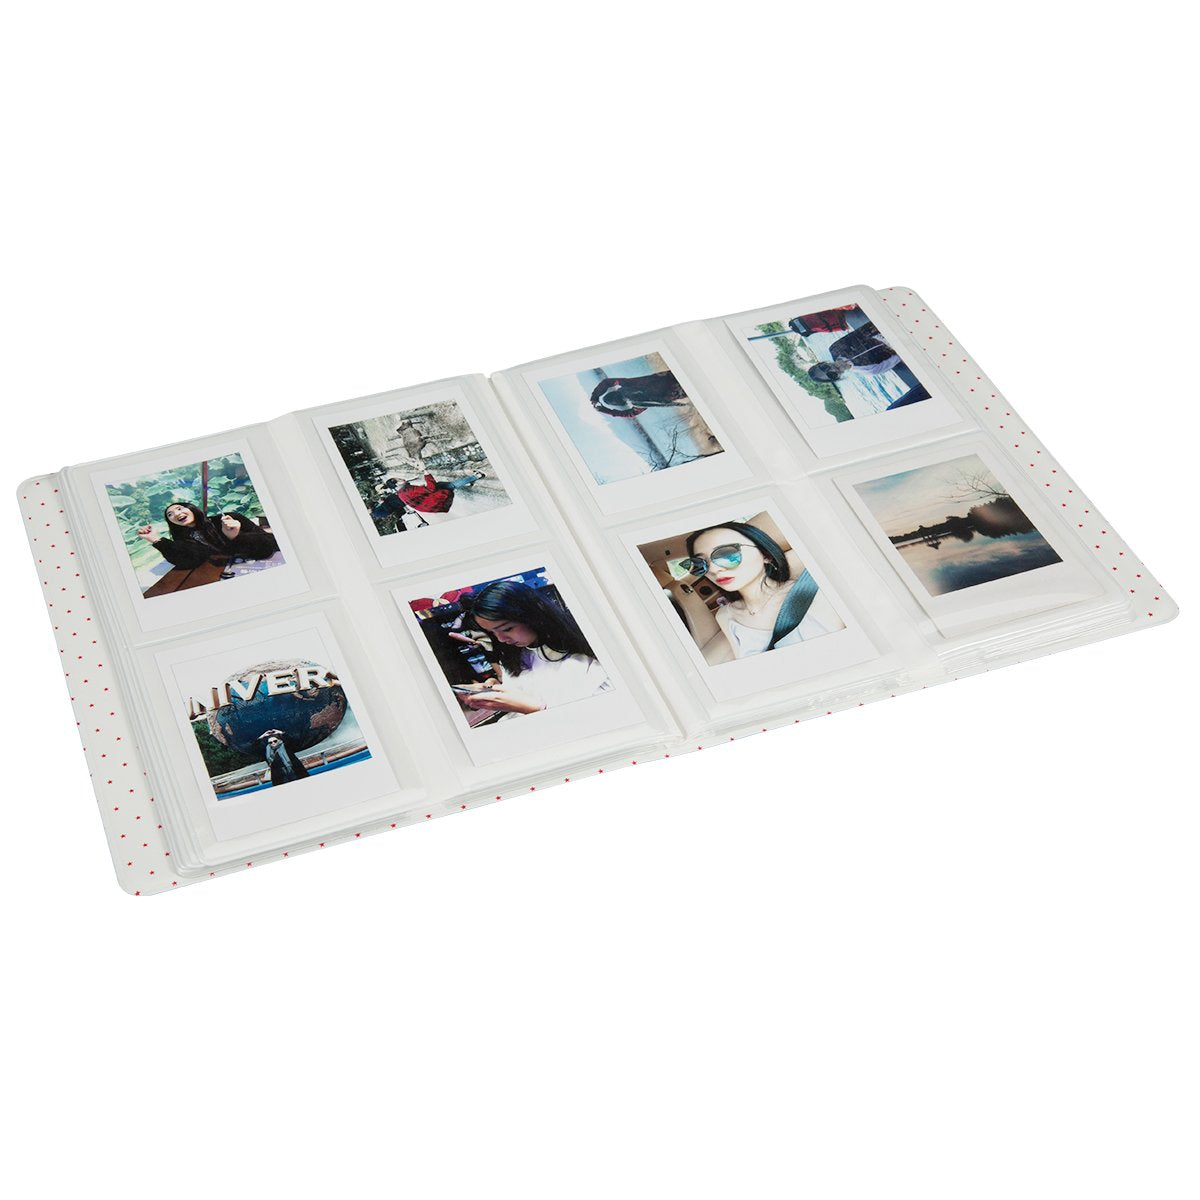 Fujifilm Instax Mini 5 Pack 10 Sheets Instant Film With 128-sheet Album for mini film (FLAMINGO PINK)